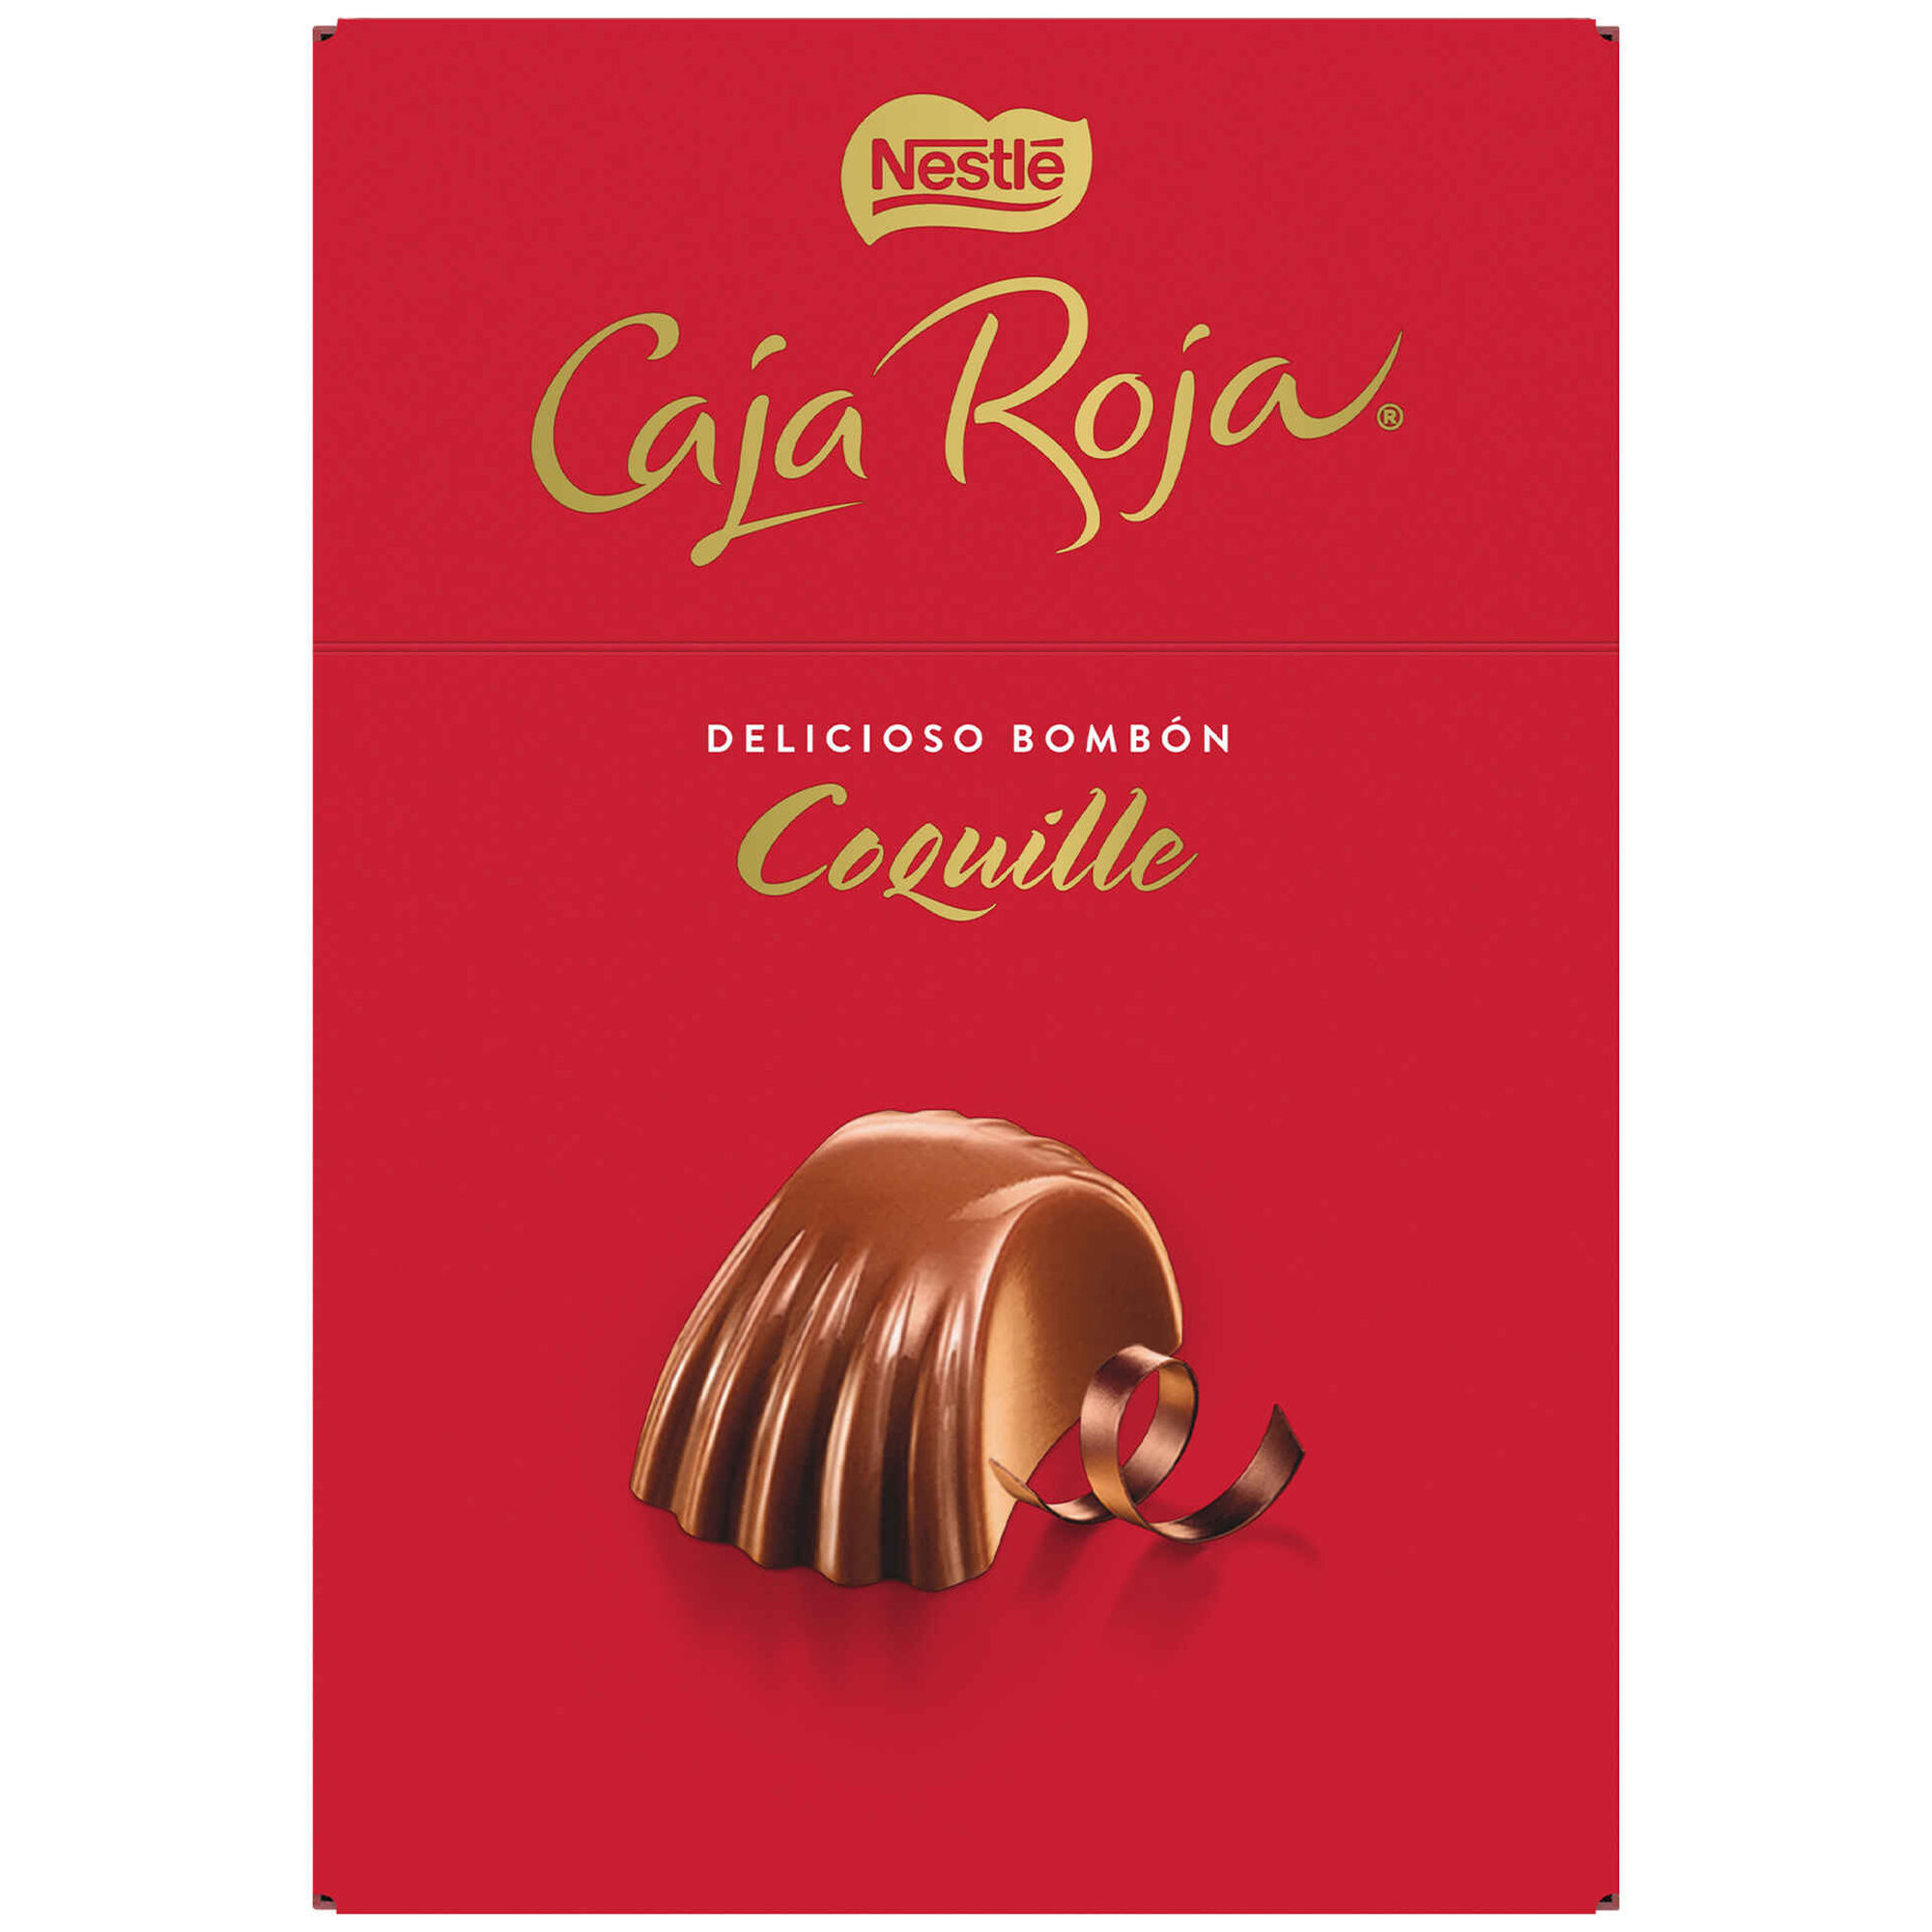 Bombons de Chocolate Caja Roja Coquille - emb. 144 gr - Nestlé